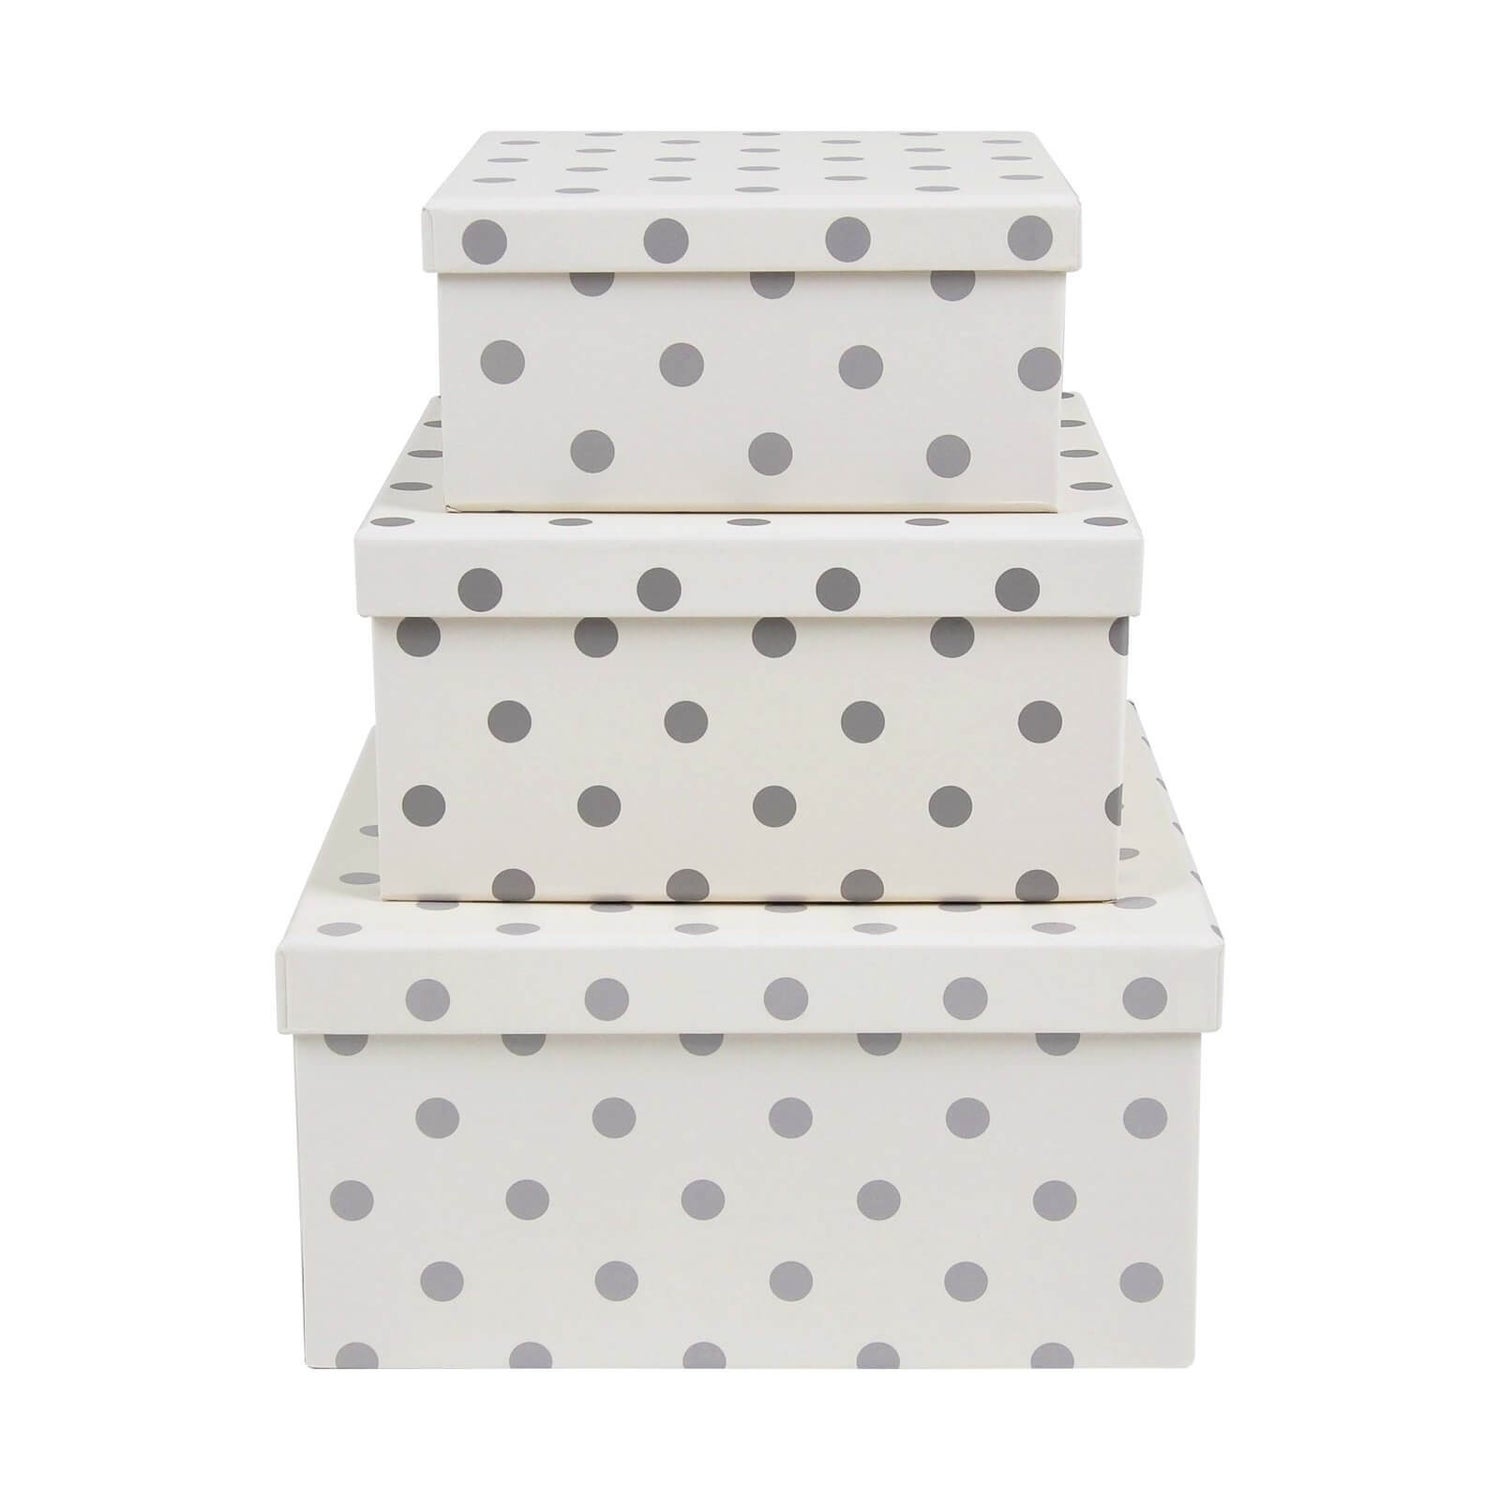 Spot Cardboard Storage Boxes Set Of 3, Decorative Storage Boxes With Lids Cardboard